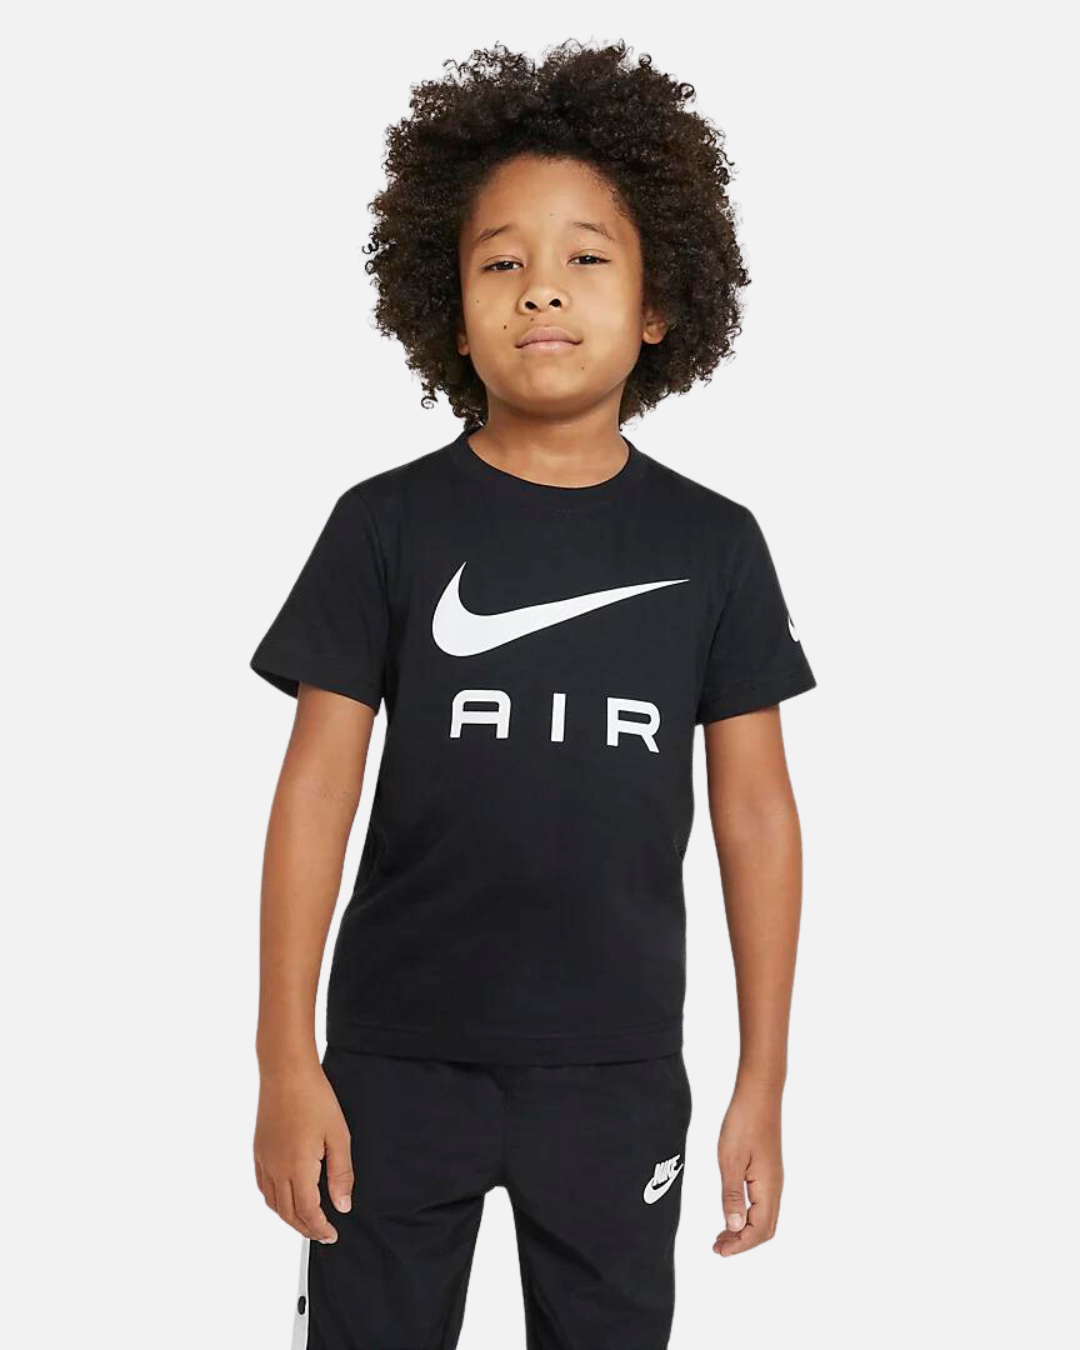 T-shirt Nike Futura pour enfant